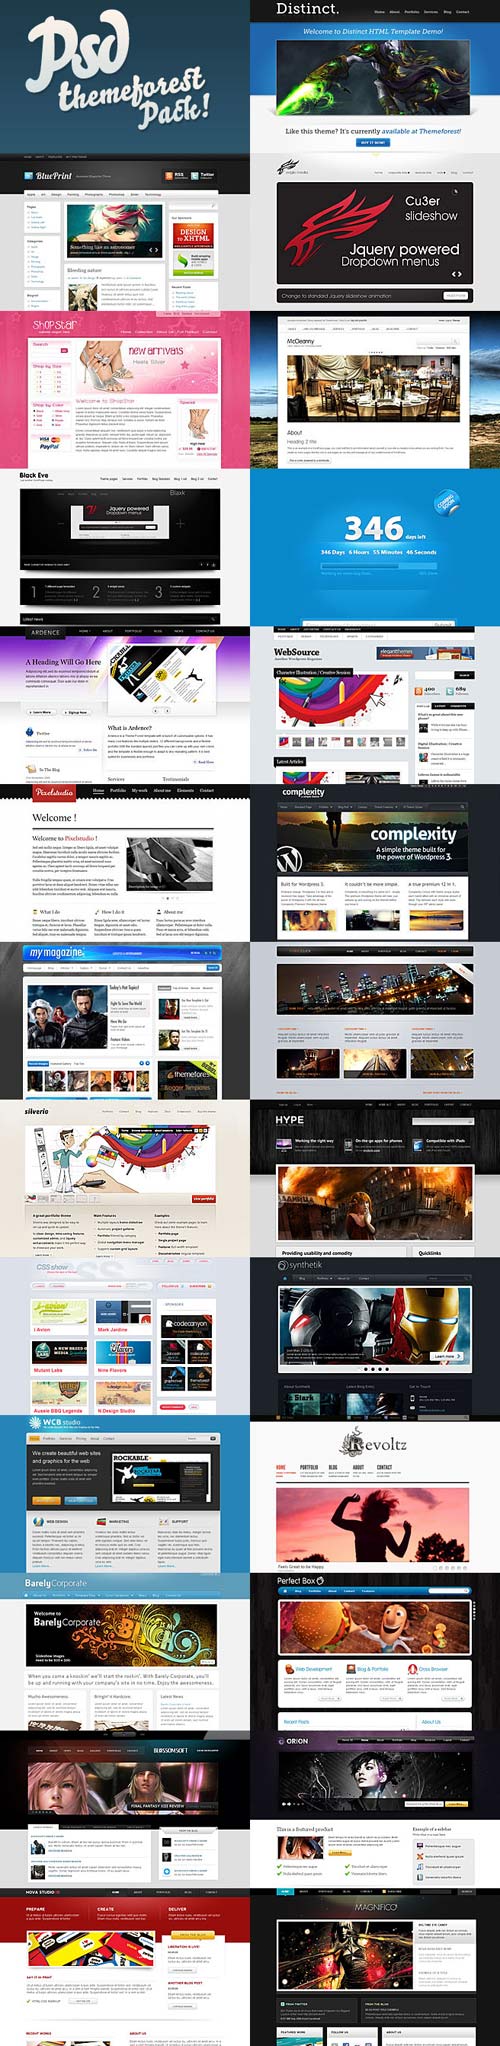 ThemeForest - PSD Web Site Templates